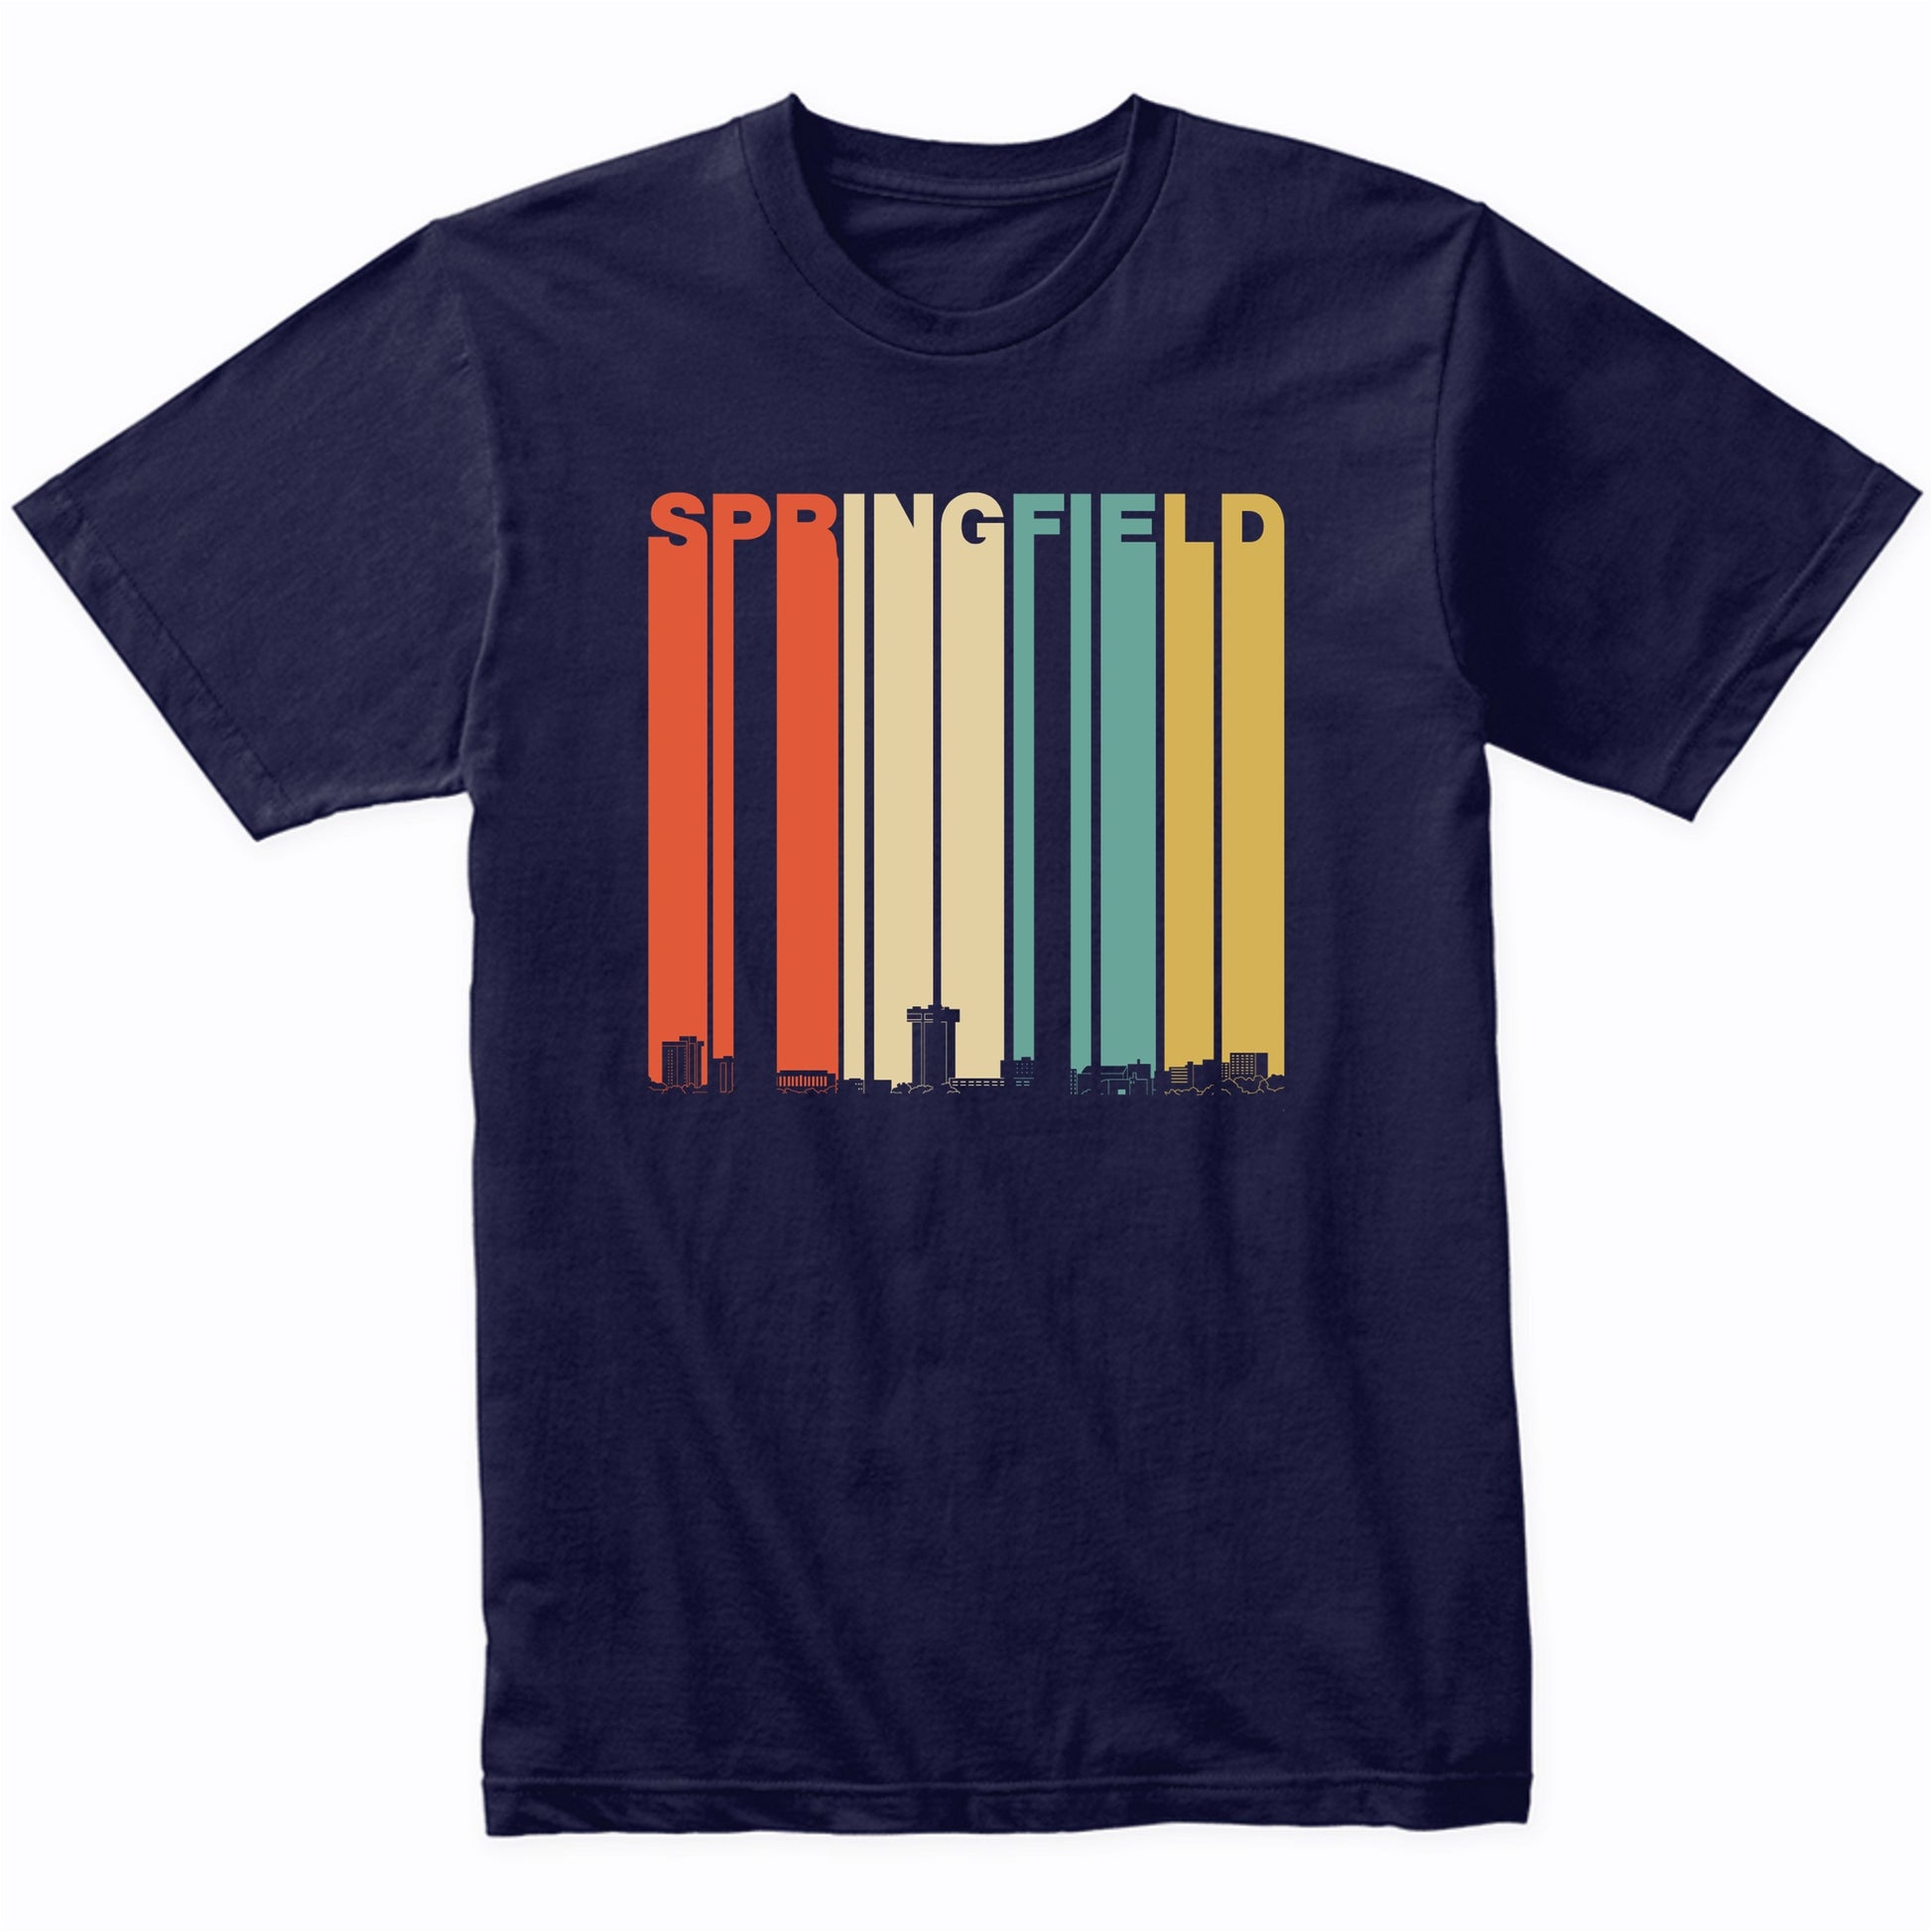 Vintage 1970's Style Springfield Missouri Skyline T-Shirt